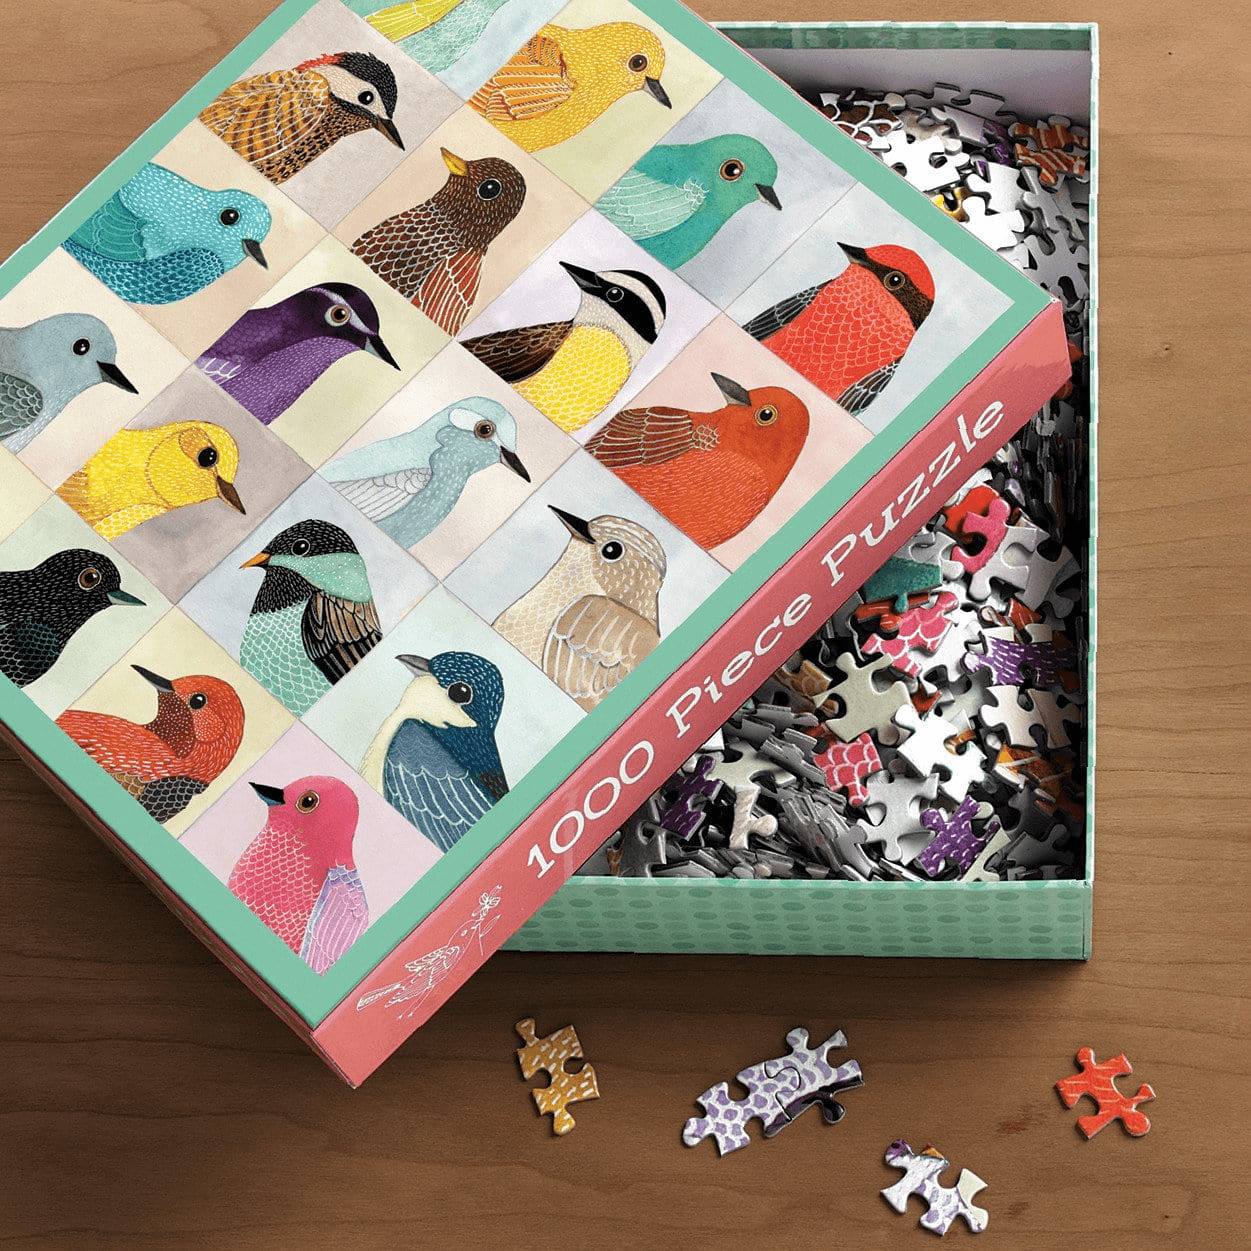 Avian Friends | 1,000 Piece Jigsaw Puzzle